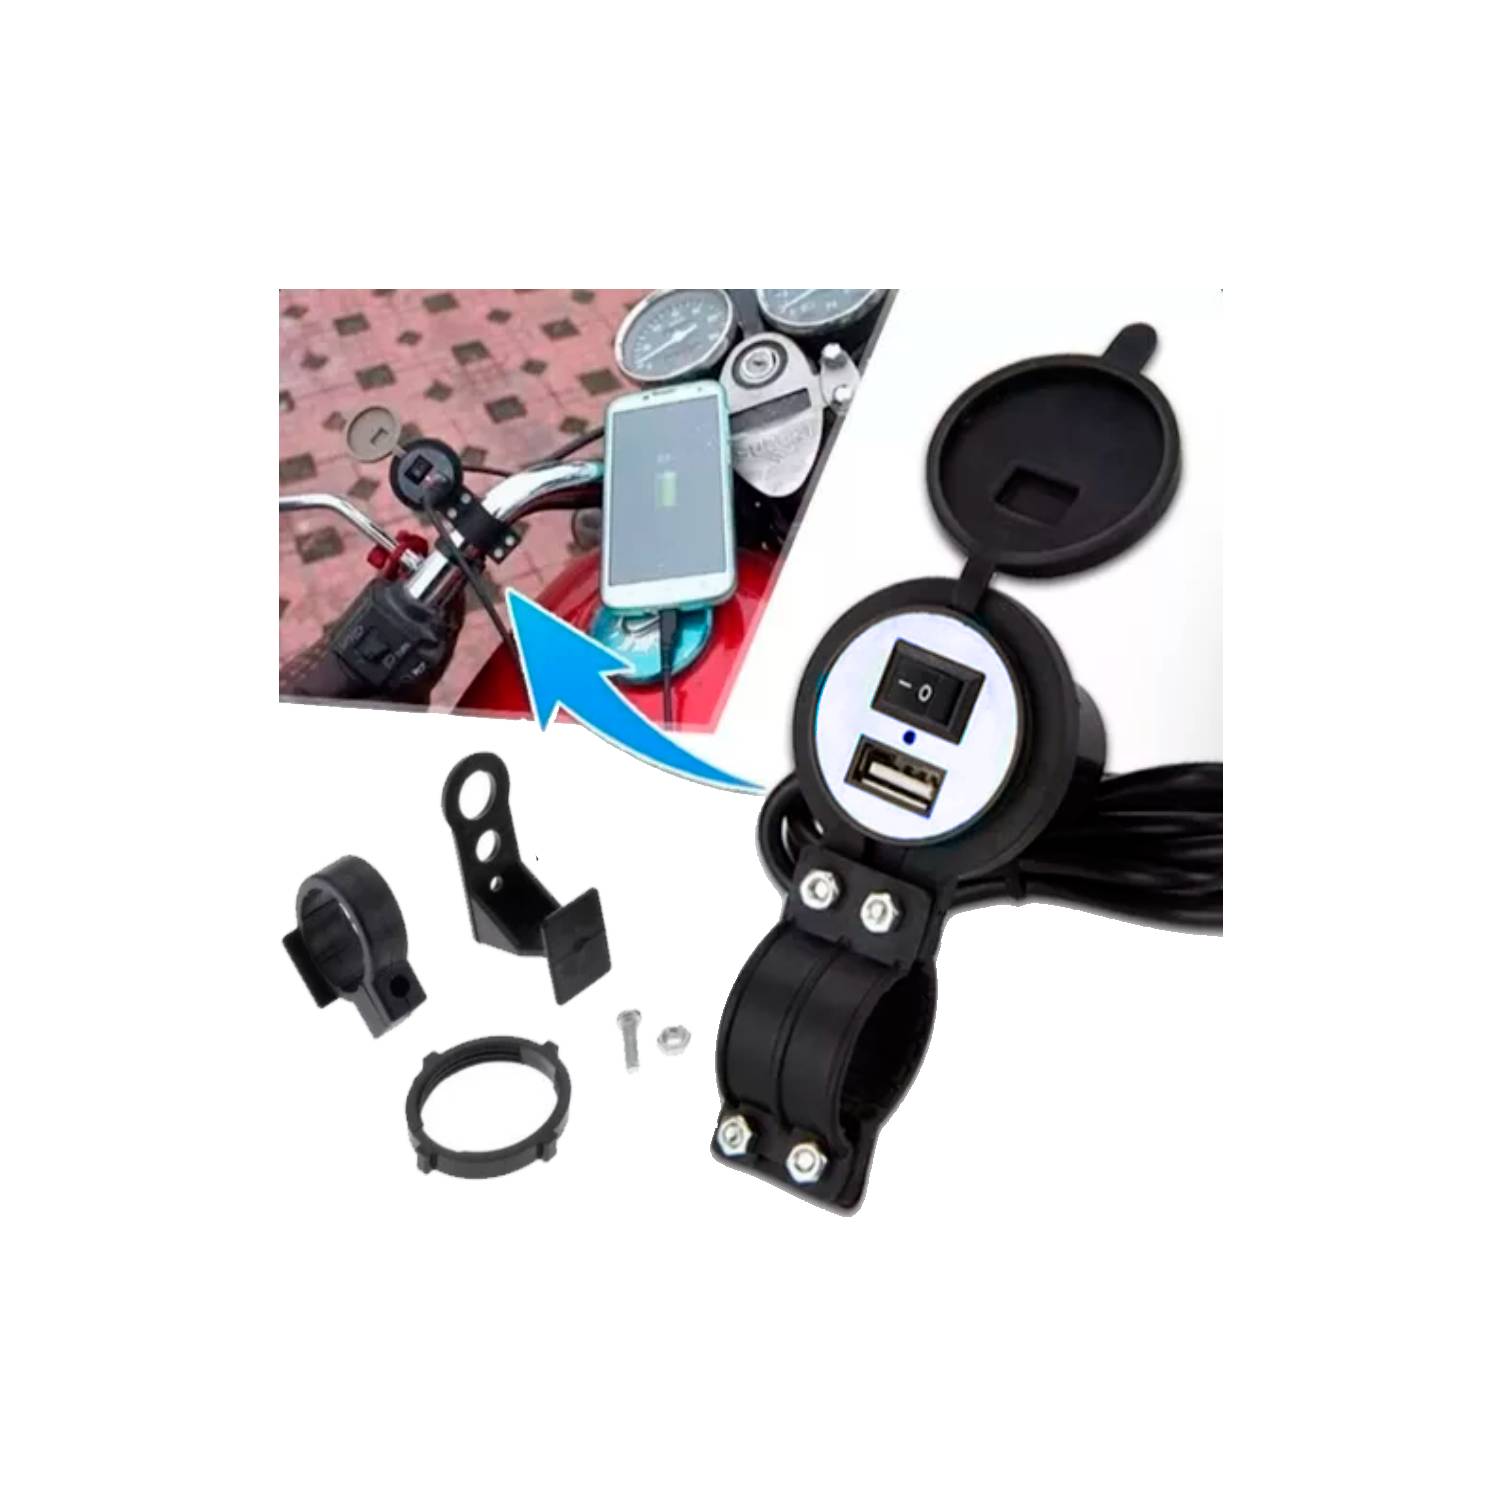 Cargador USB Moto Motocicleta Soporte Impermeable Telefono